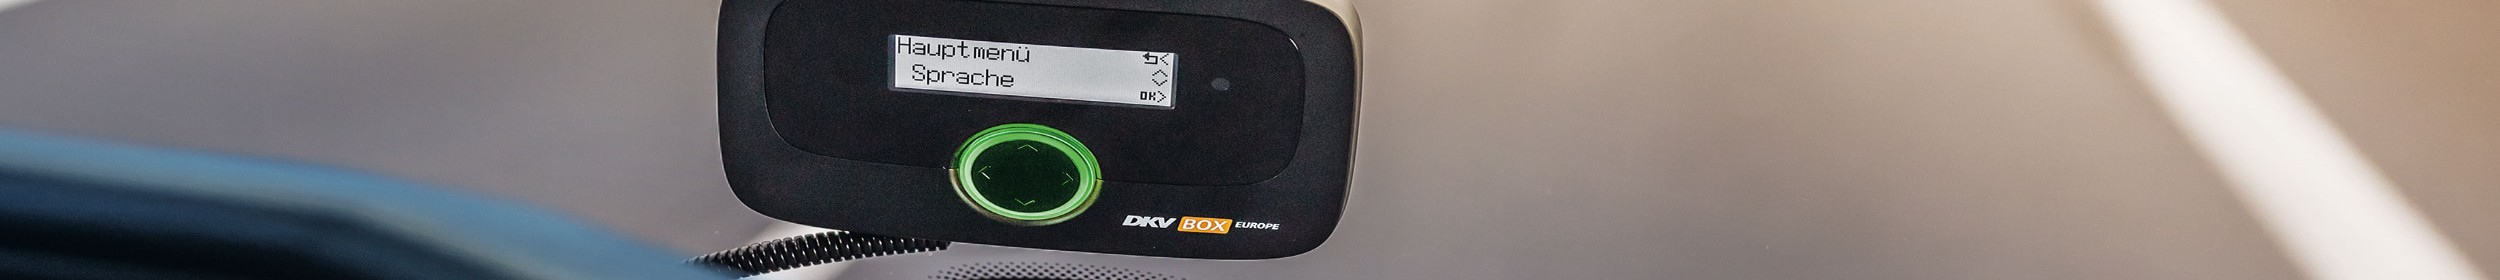 DKV BOX Europe